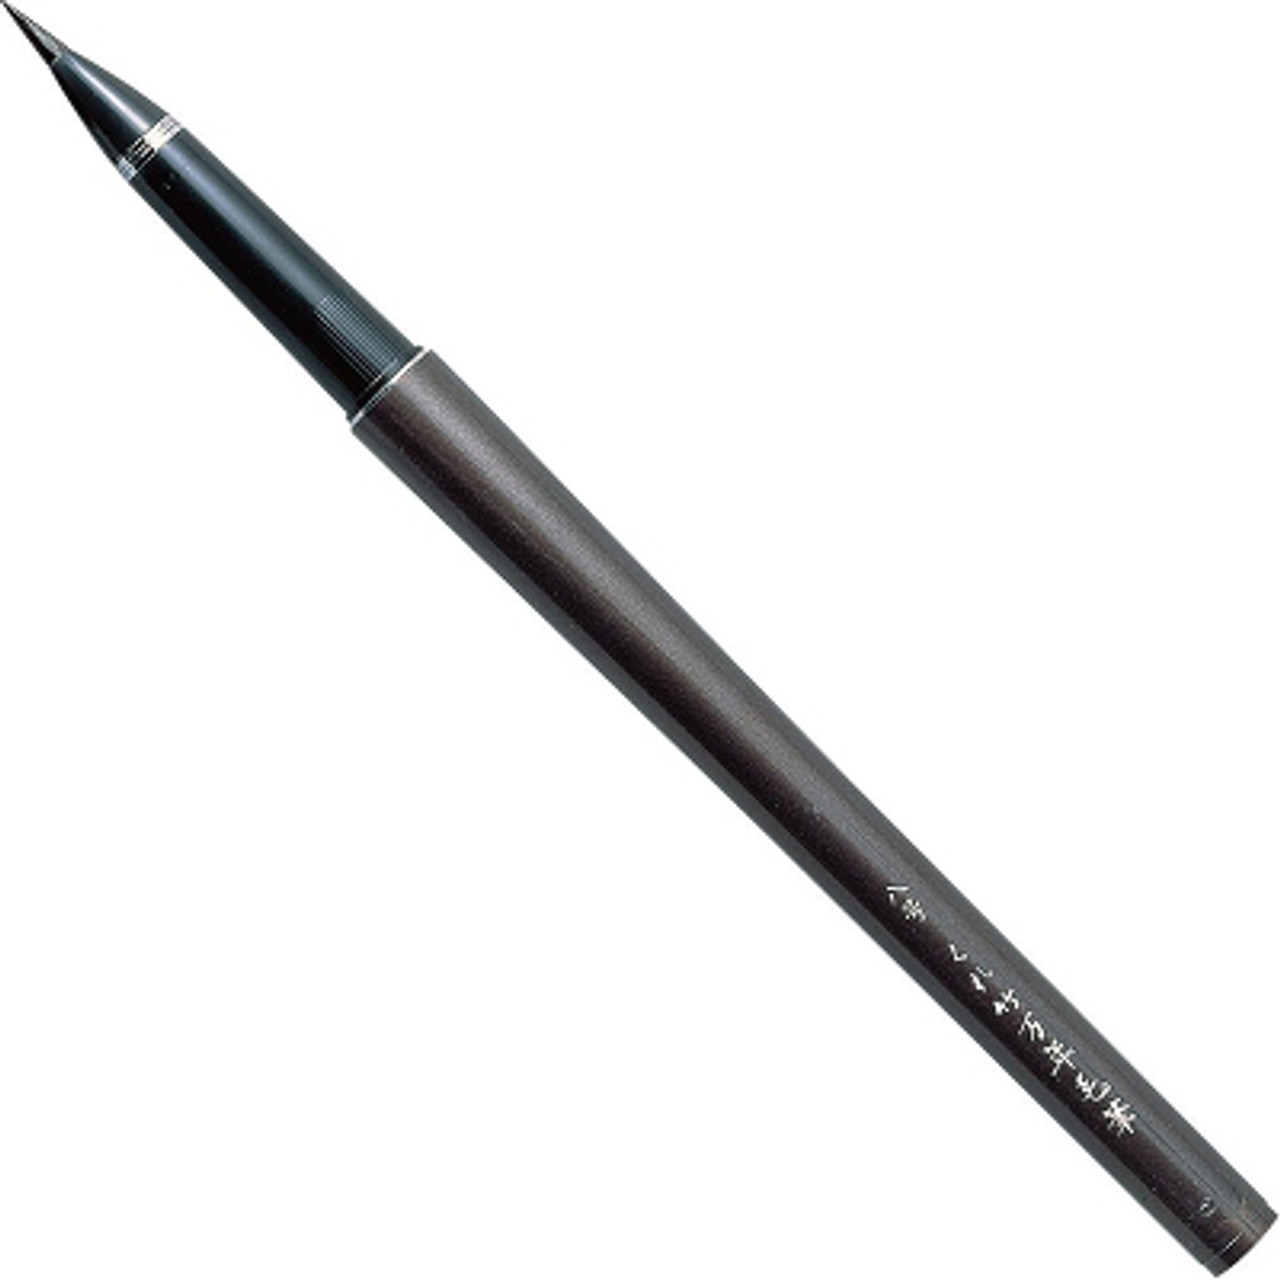 Kuretake Brush Pen Fountain Pen Makie Red Fuji Black Axis Wiht Box Very  Nice ❇️